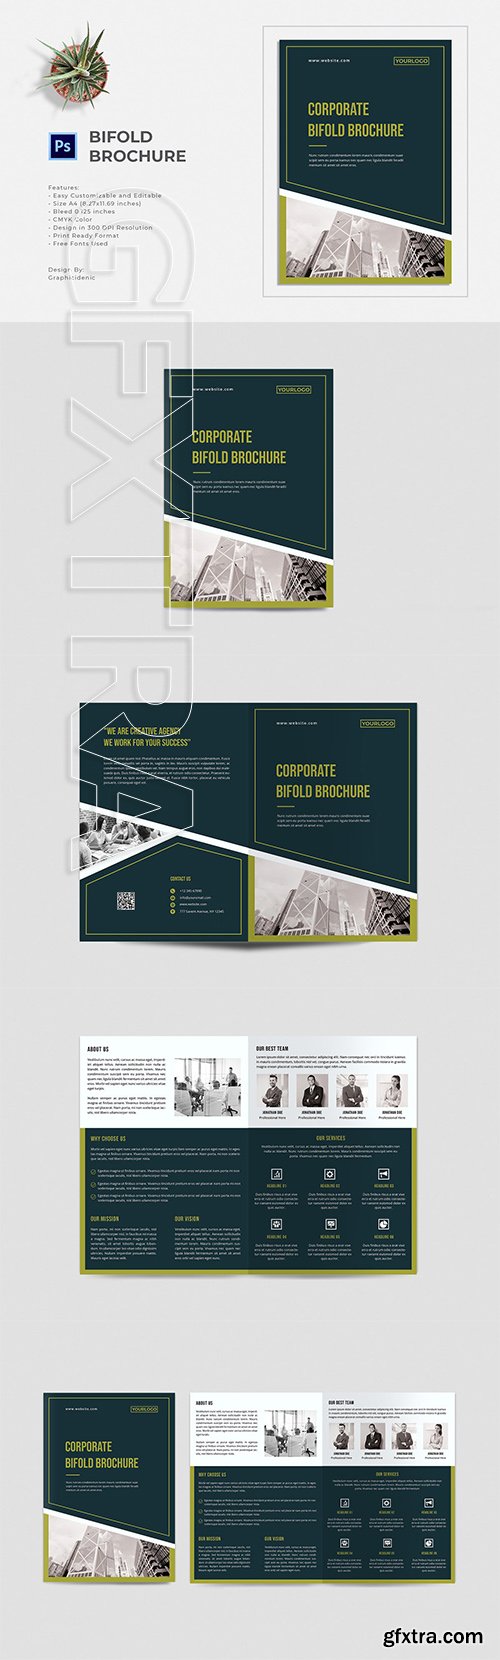 CreativeMarket - Bifold Brochure 3767506